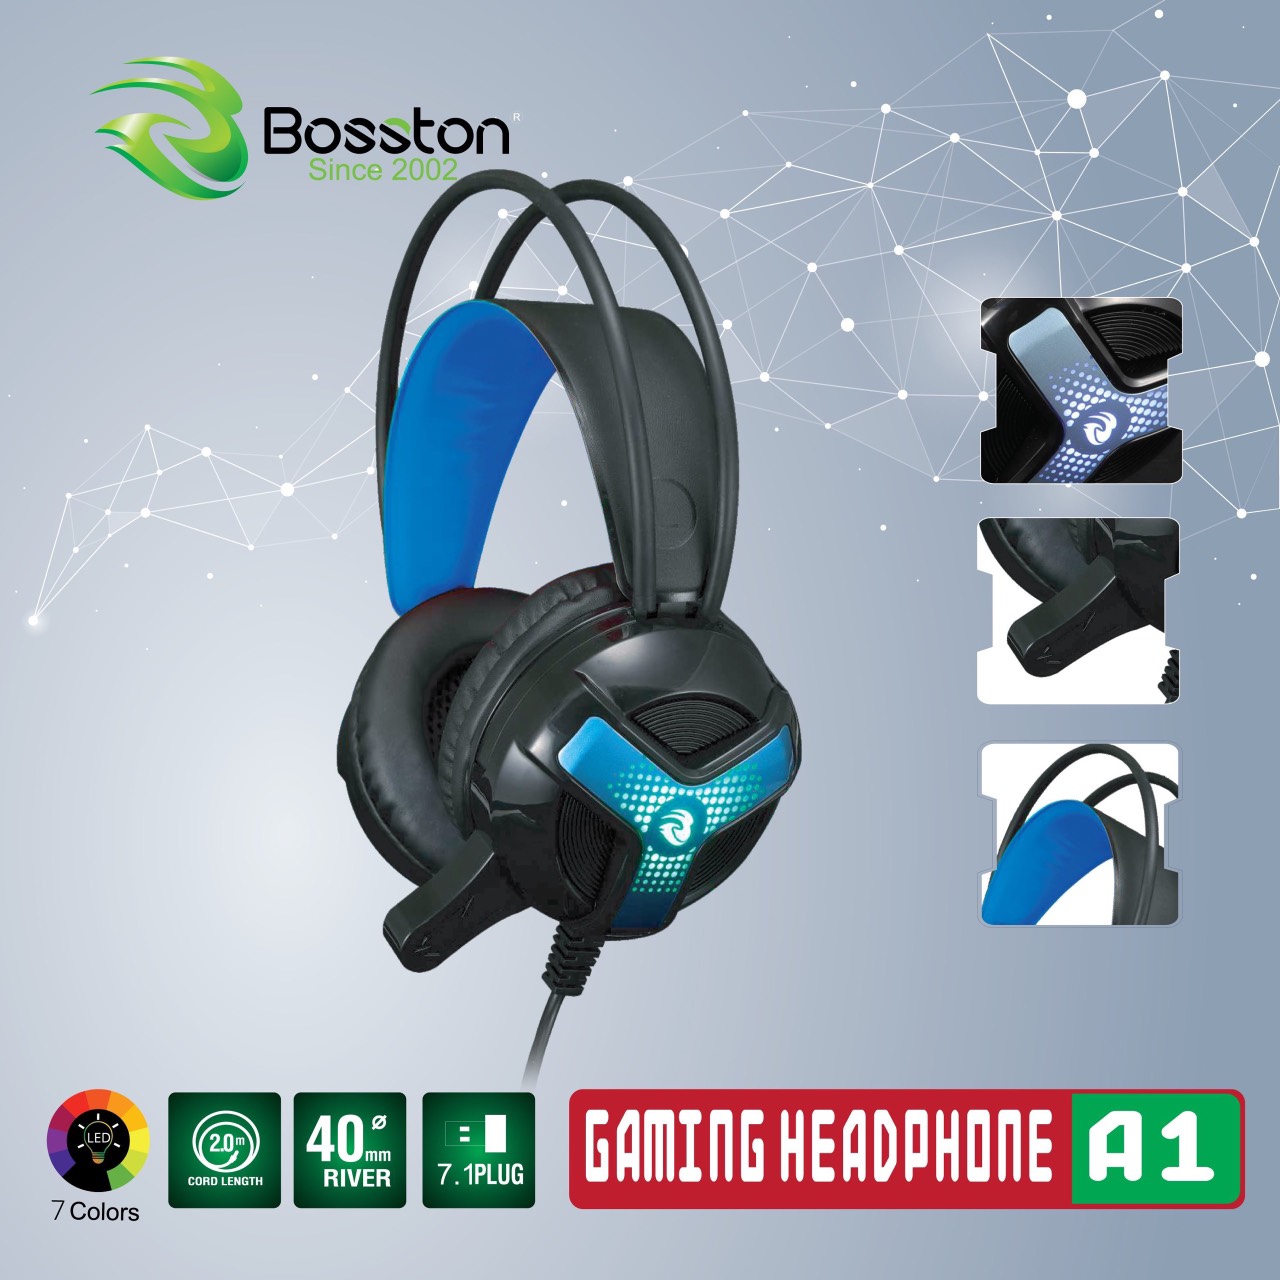 Headphone Bosston gaming A1